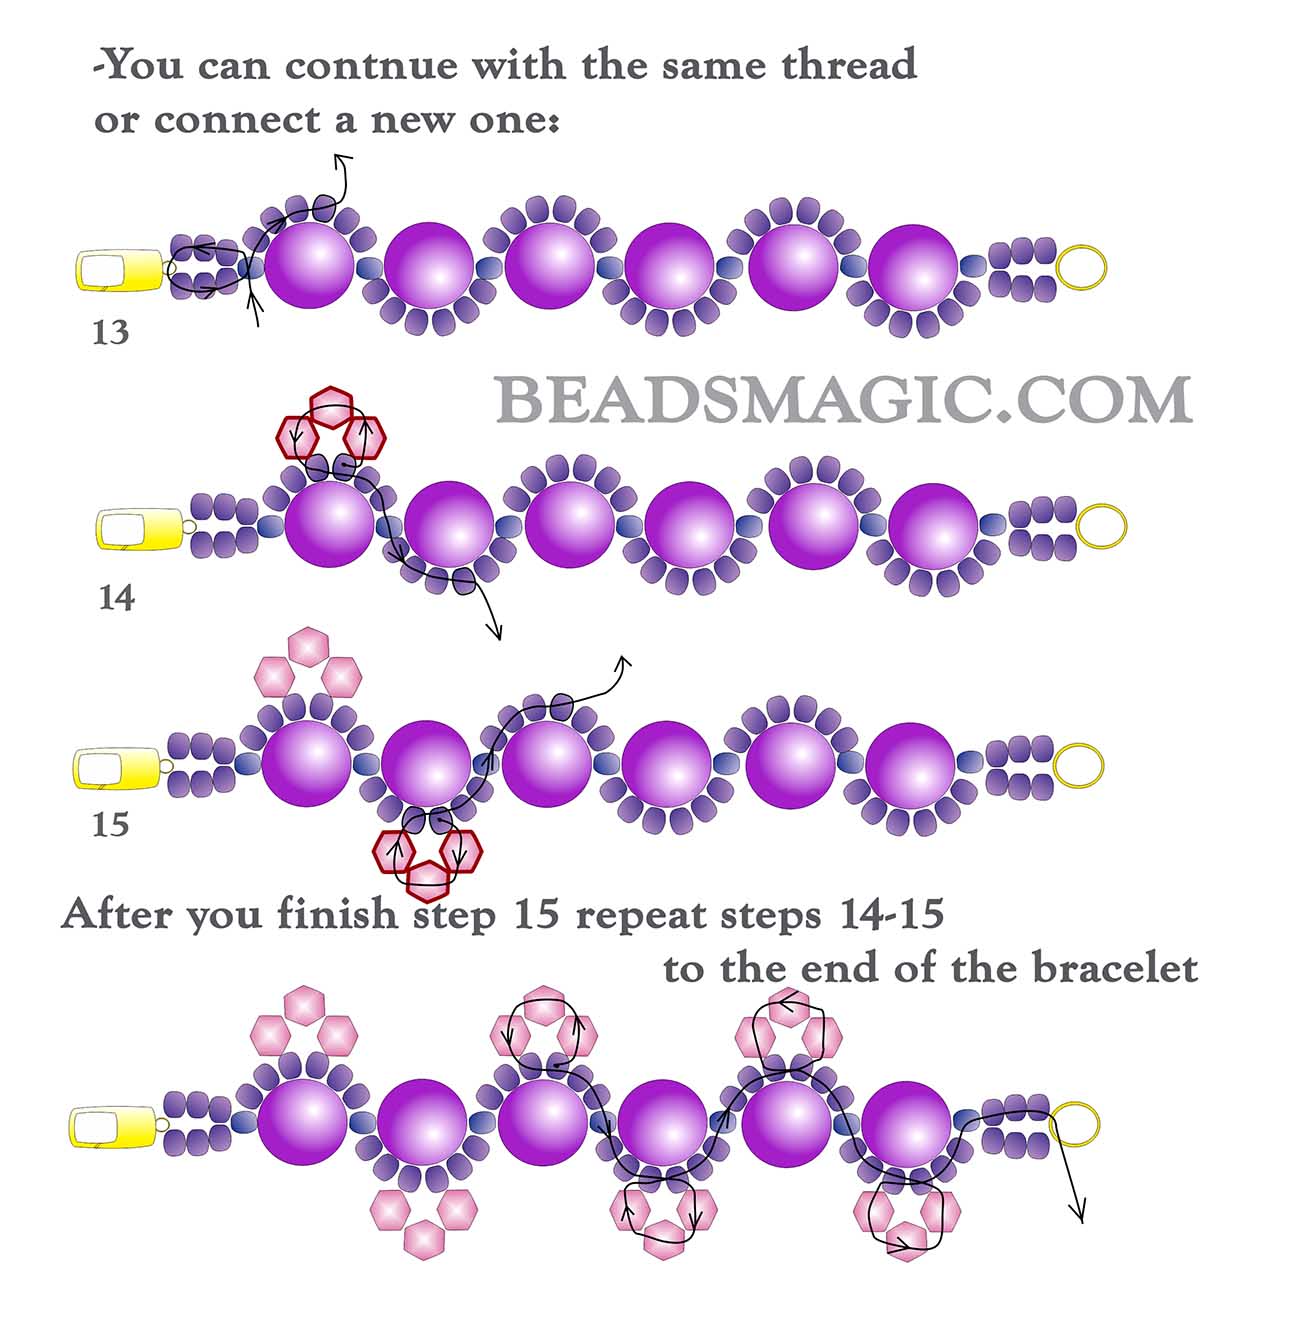 free bead tutorial for bracelet Taffy, bead pattern, free beading tutorial, seed beads pattern, beadweaving, bicones, toho beads, rutkovsky, pink bracelet, free beading tutorial